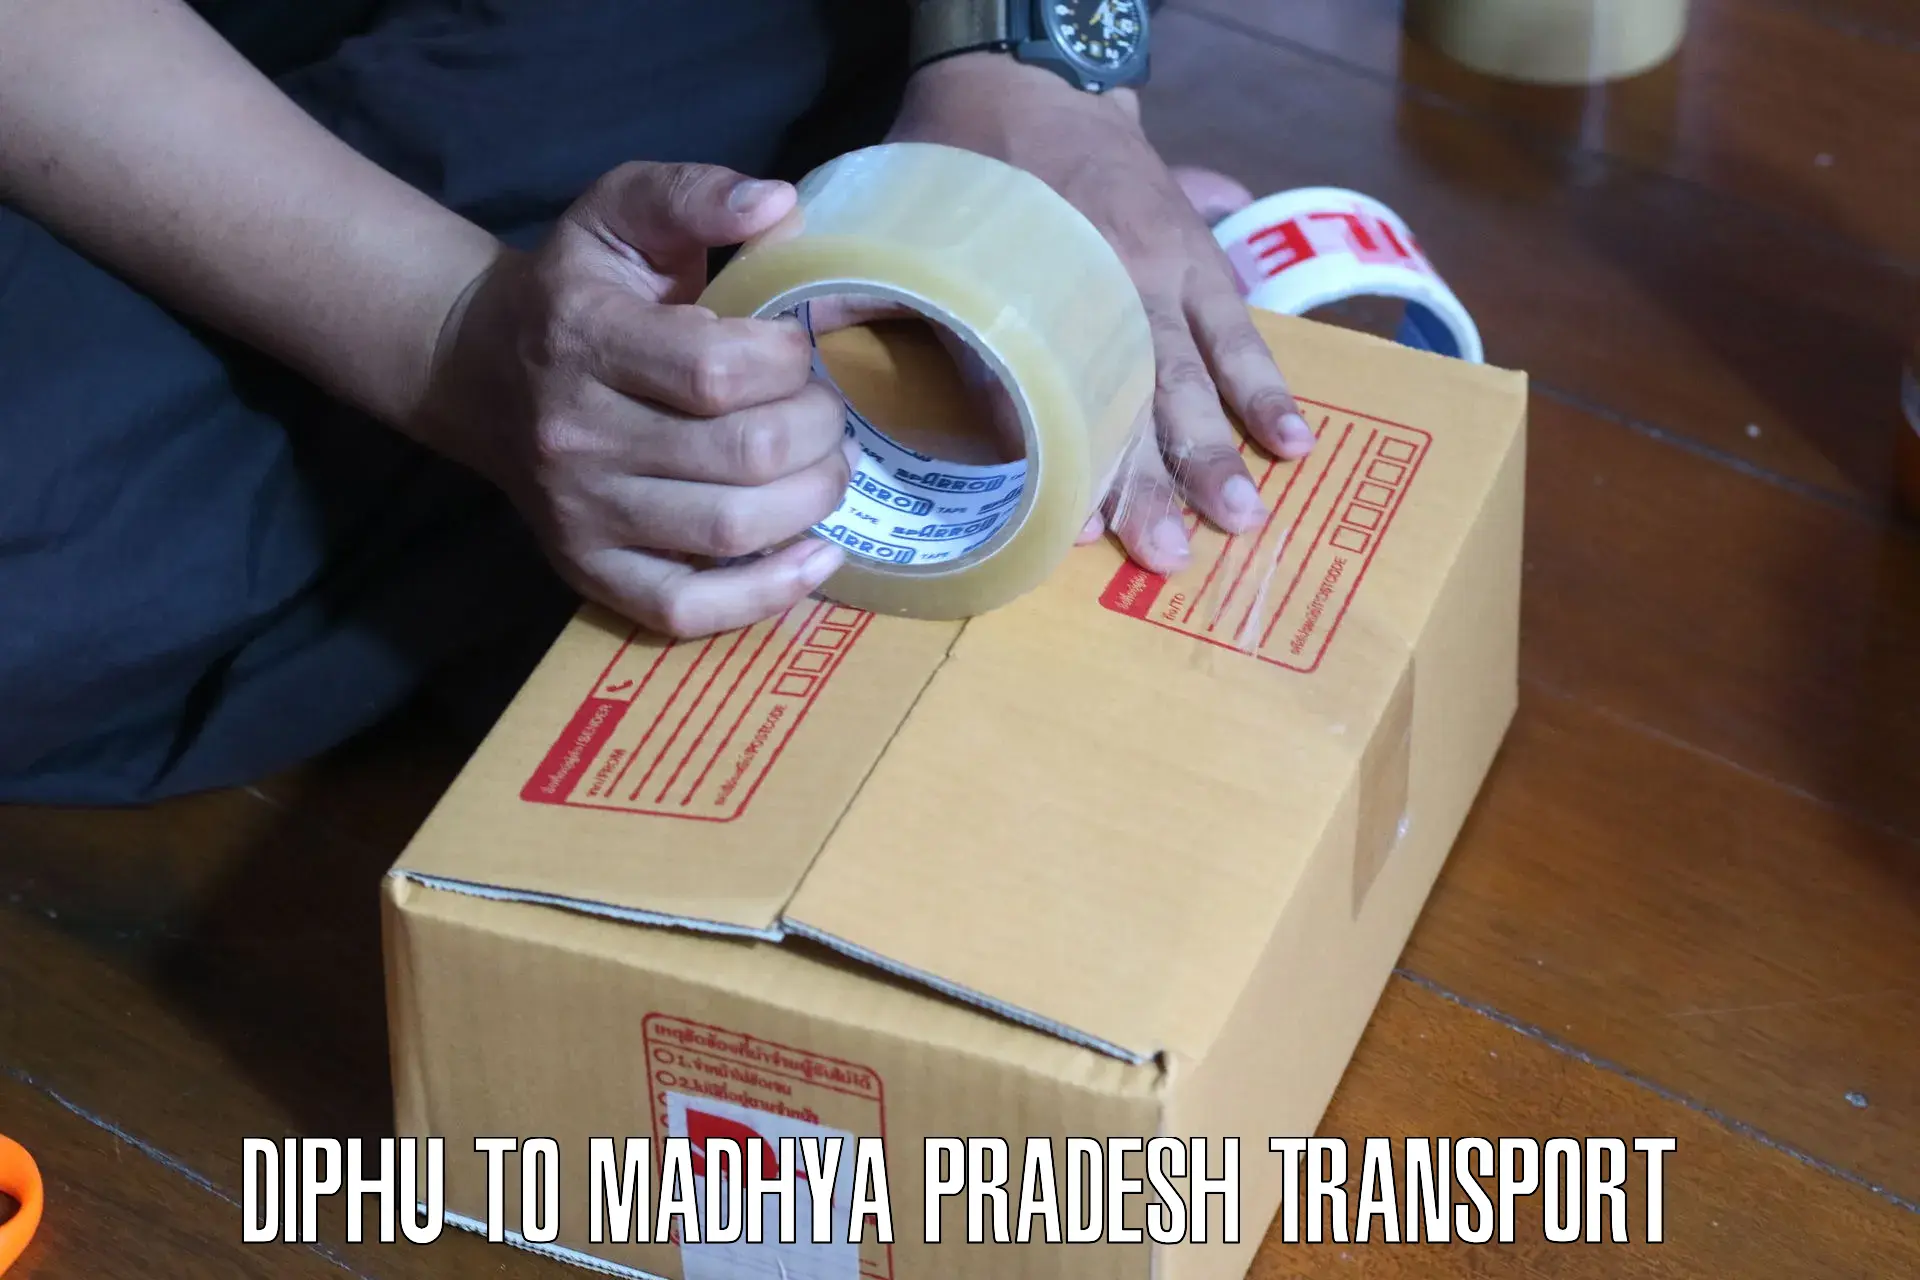 Bike shipping service Diphu to Ashta